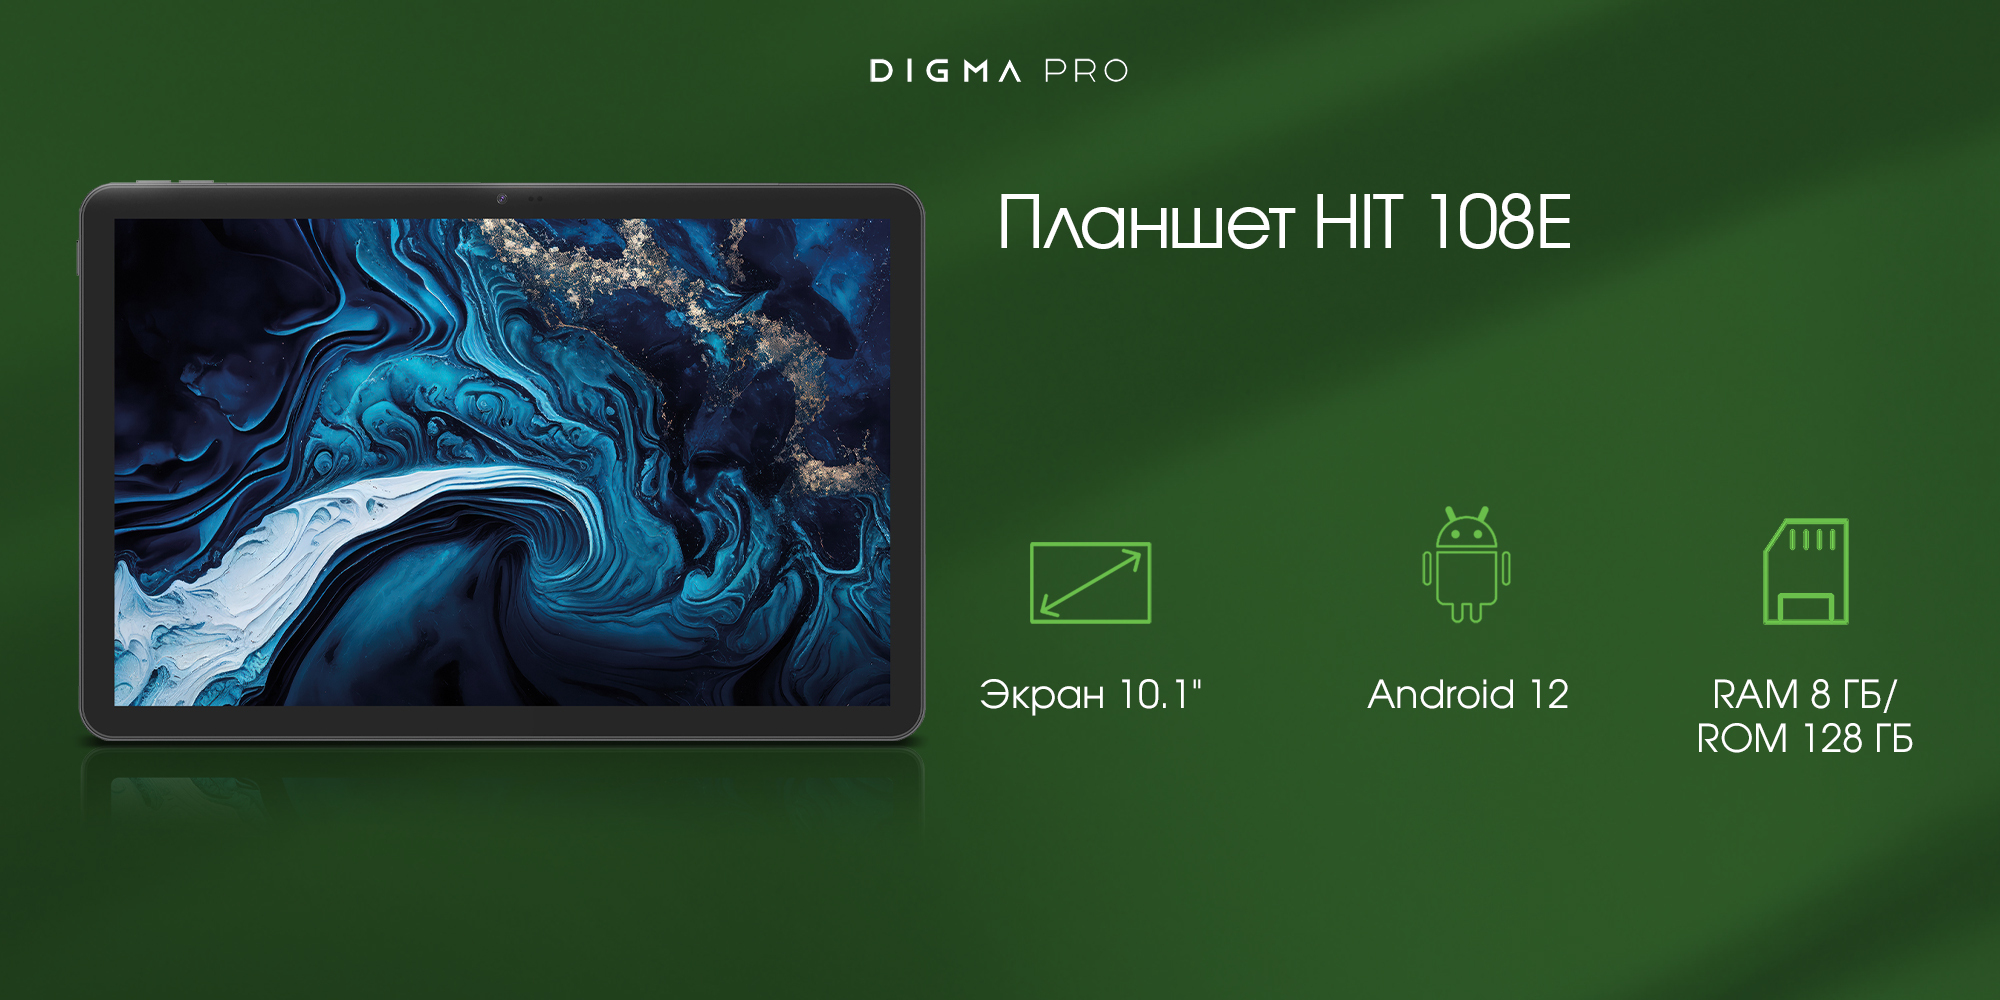       Digma Pro  10-     8000 